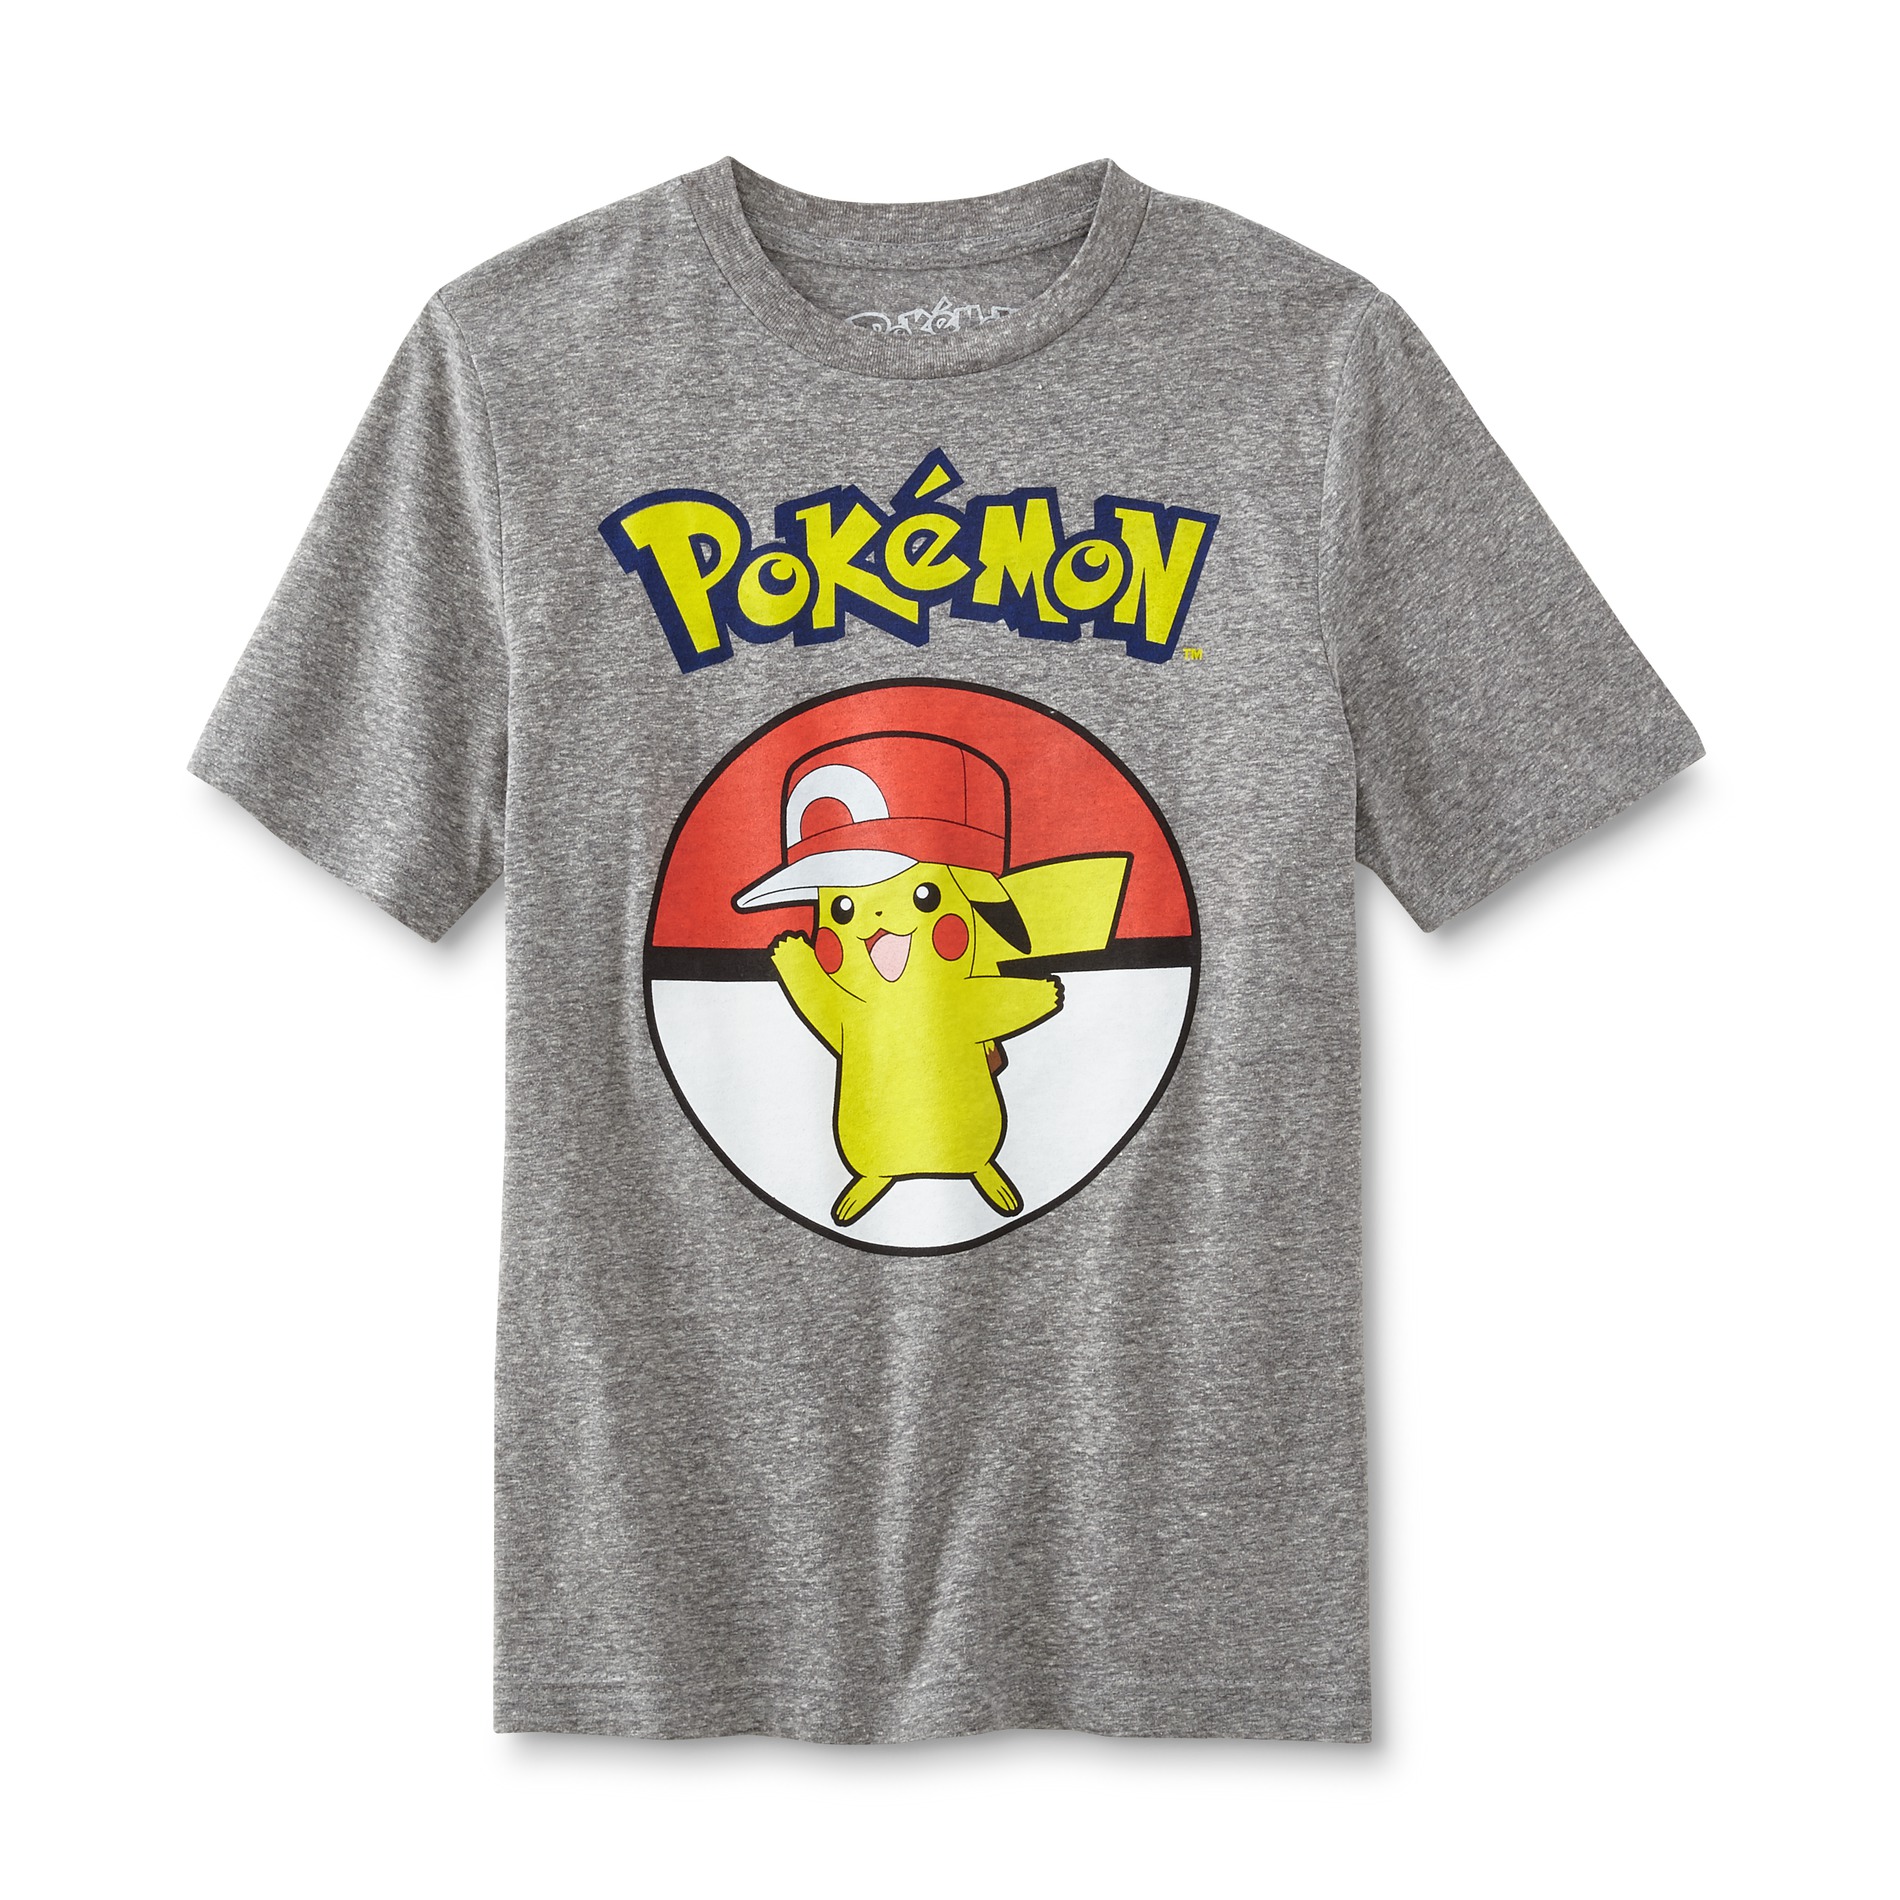 Nintendo Pokemon Boys' Graphic T-Shirt - Pikachu